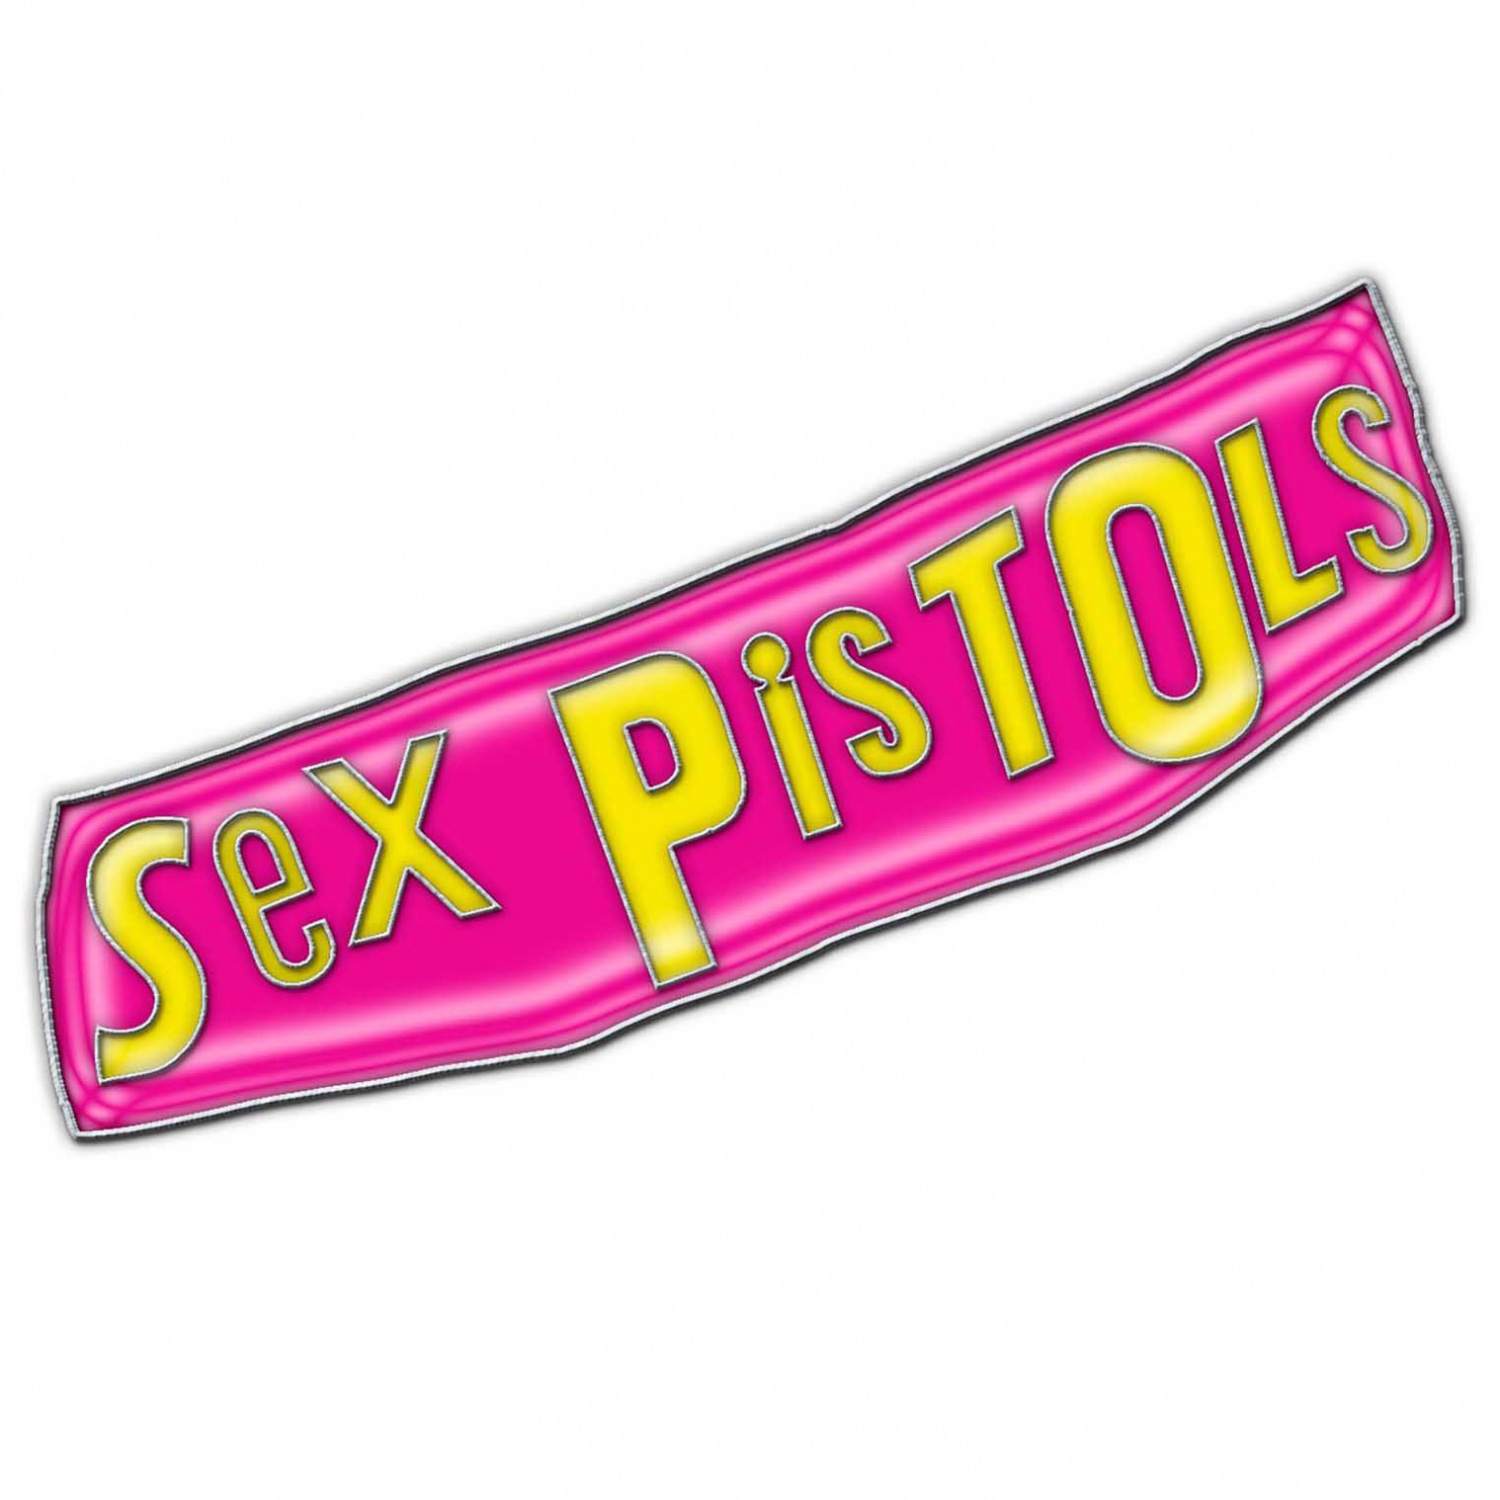 Sex Pistols - Discography